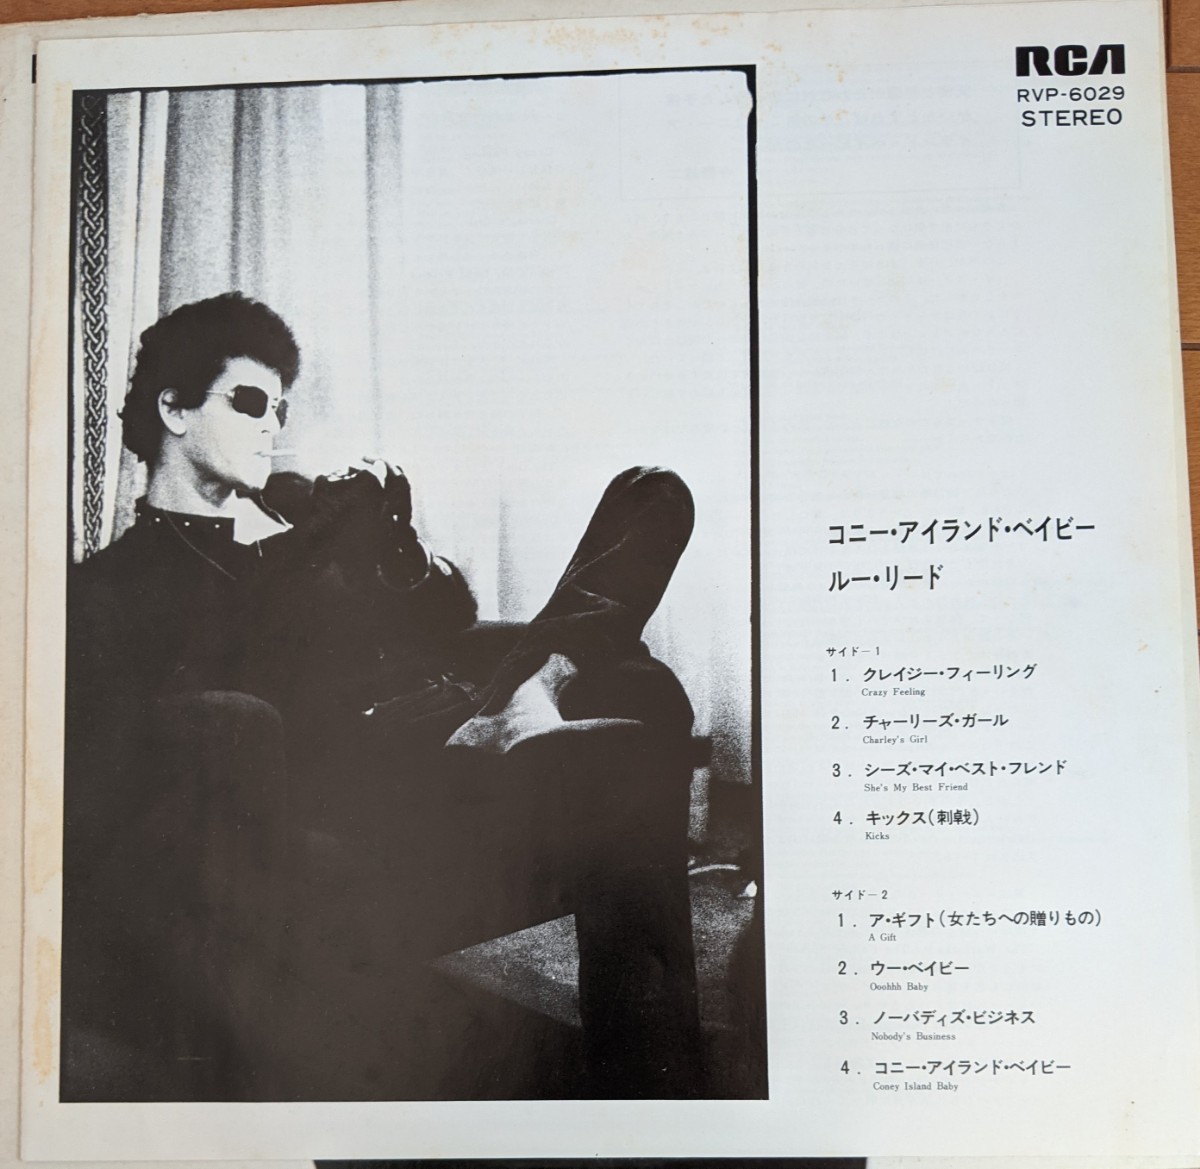 LP レコード 12inch vinyl ★ Lou Reed ★ Coney Island Baby ★ sample 見本盤